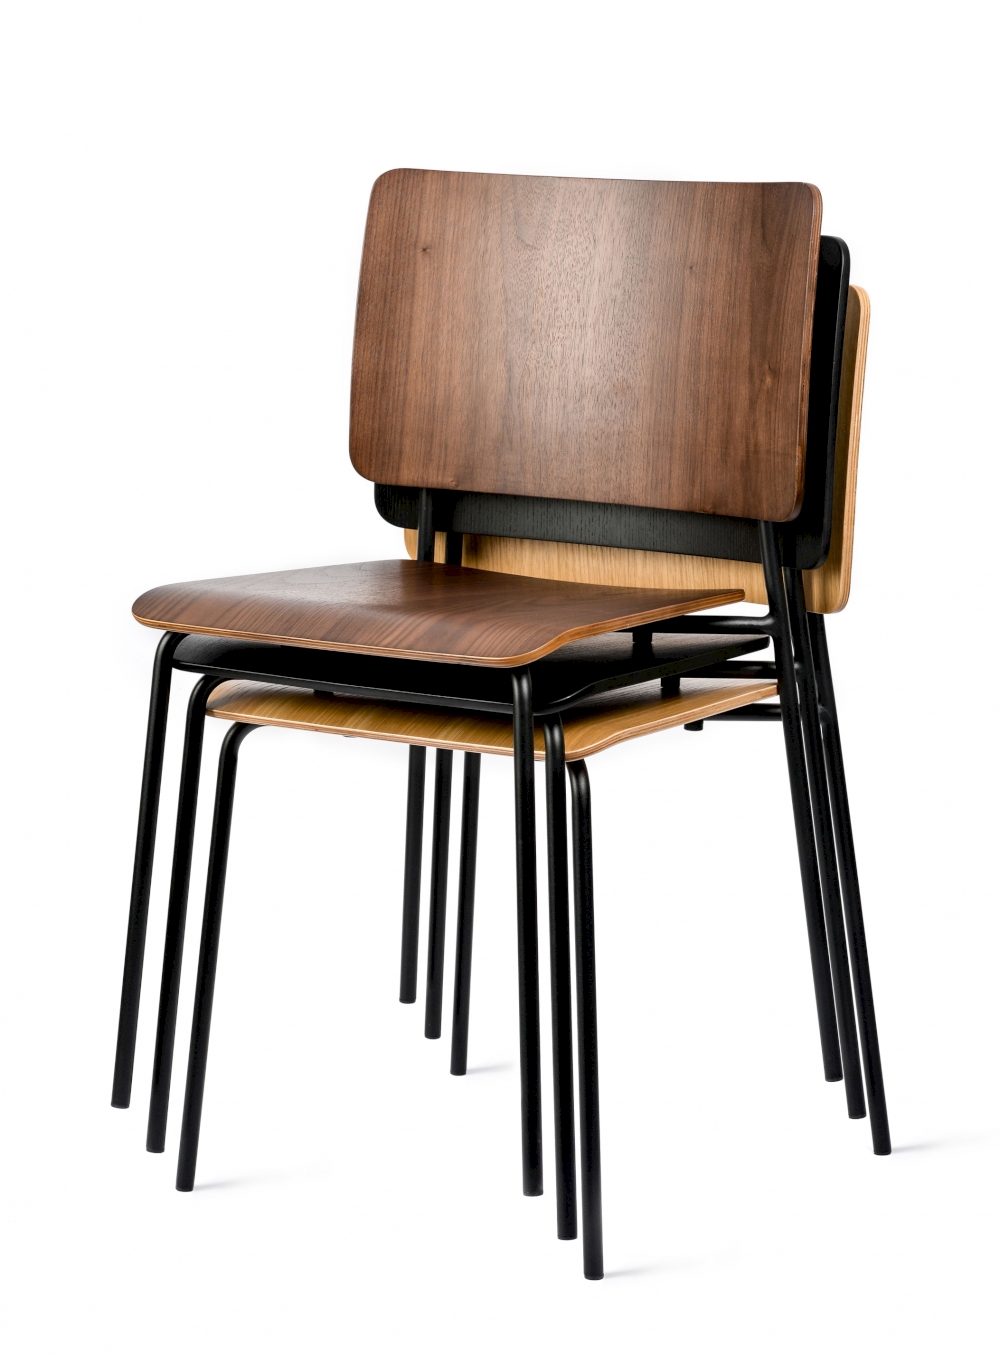 Mi metal base chair. Designed for Dohaus by Mikko Laakkonen.